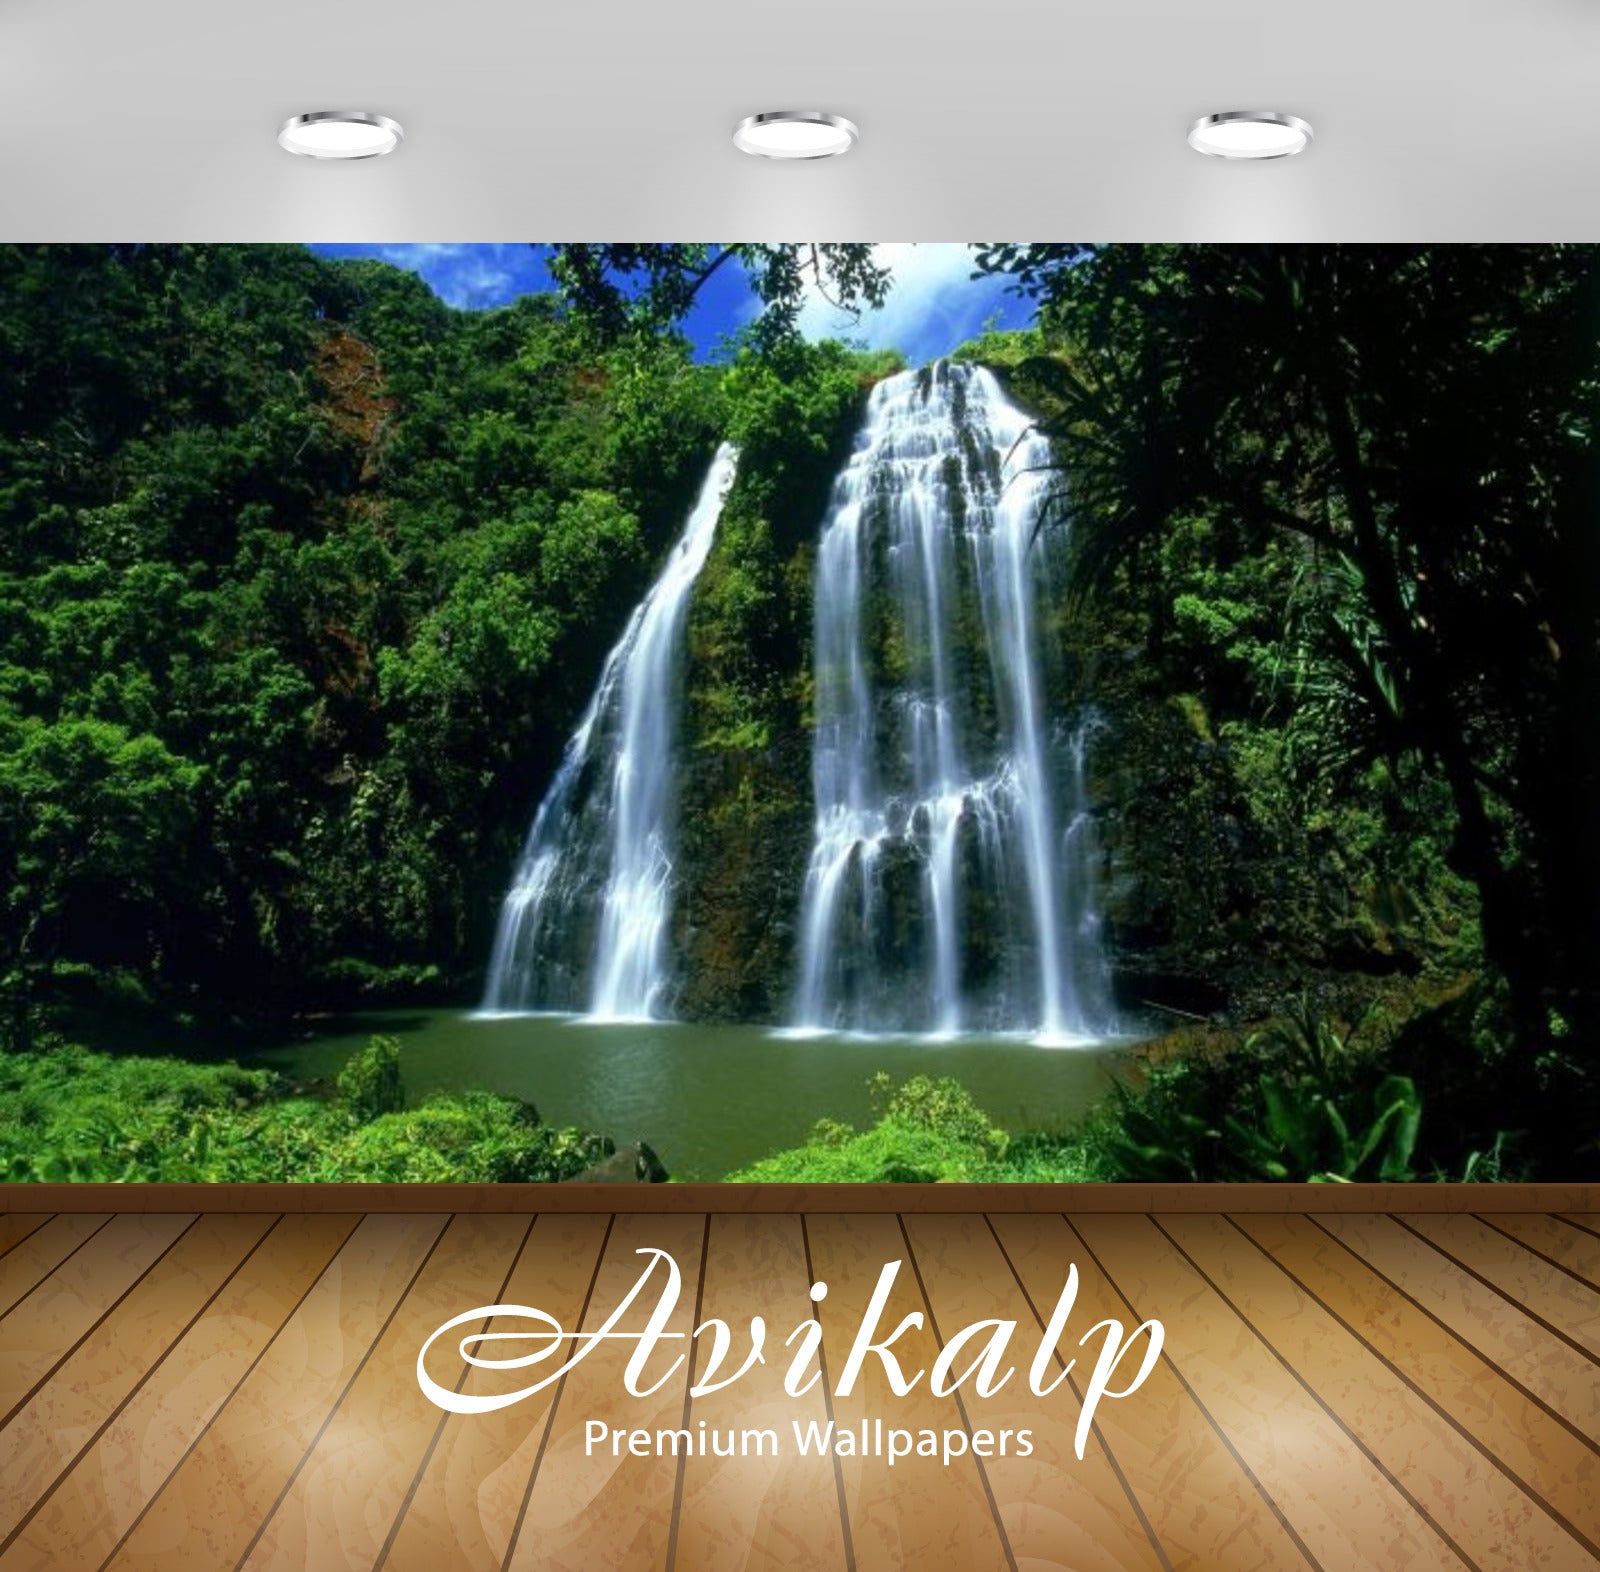 Avikalp Exclusive Awi2308 Waterfalls Shangri La China Hidden in wood Full HD Wallpapers for Living r